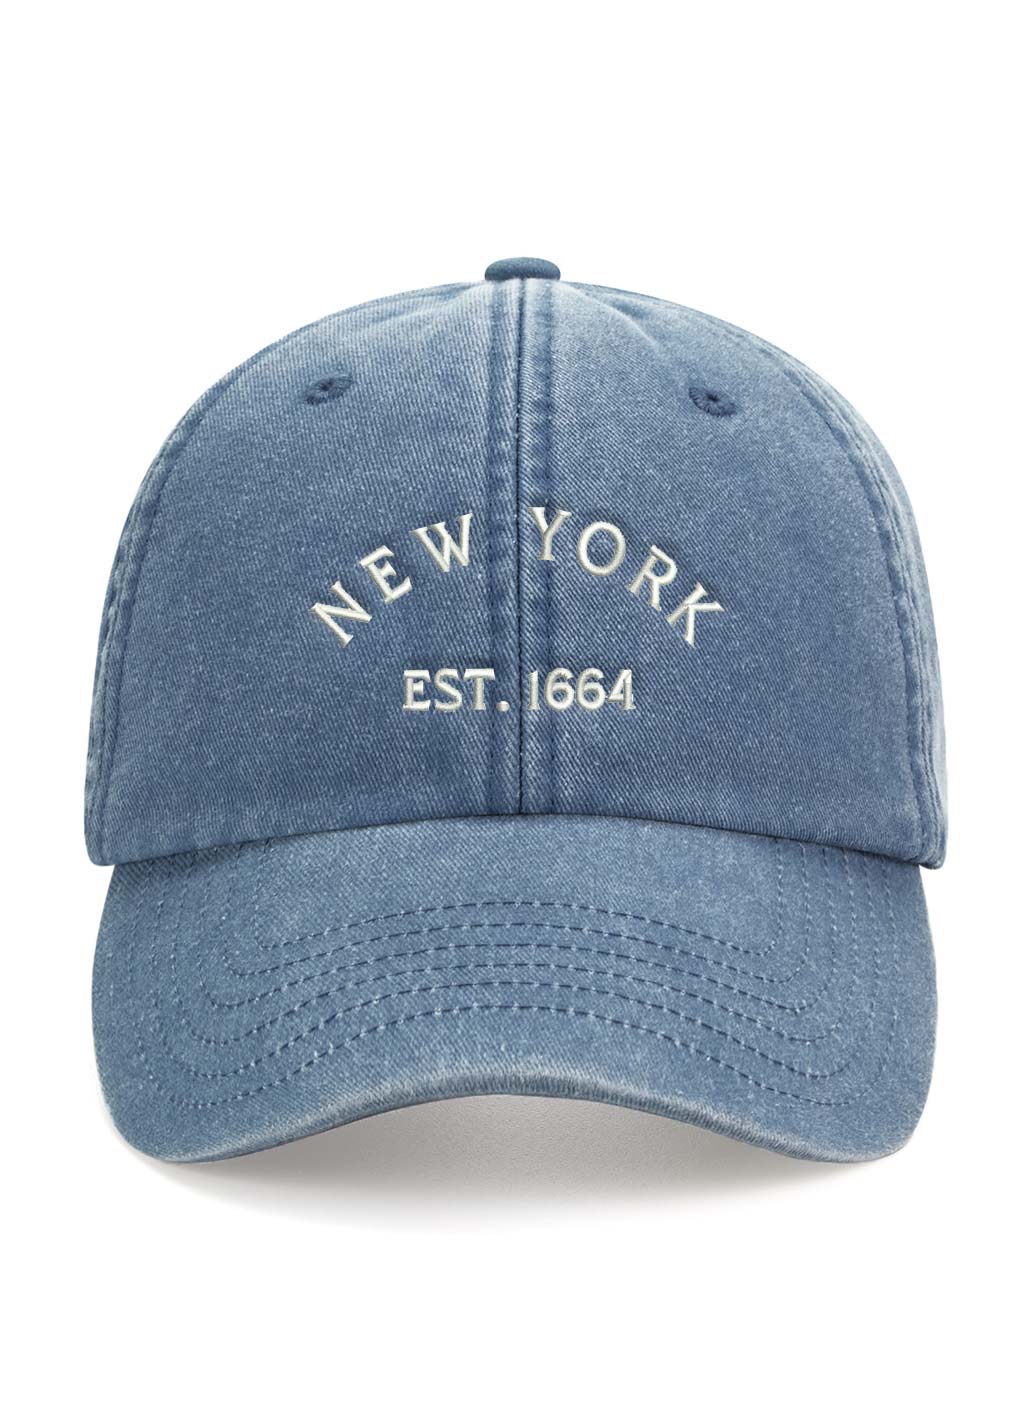 'NEW' VINTAGE NEW YORK CAP - LIGHT DENIM